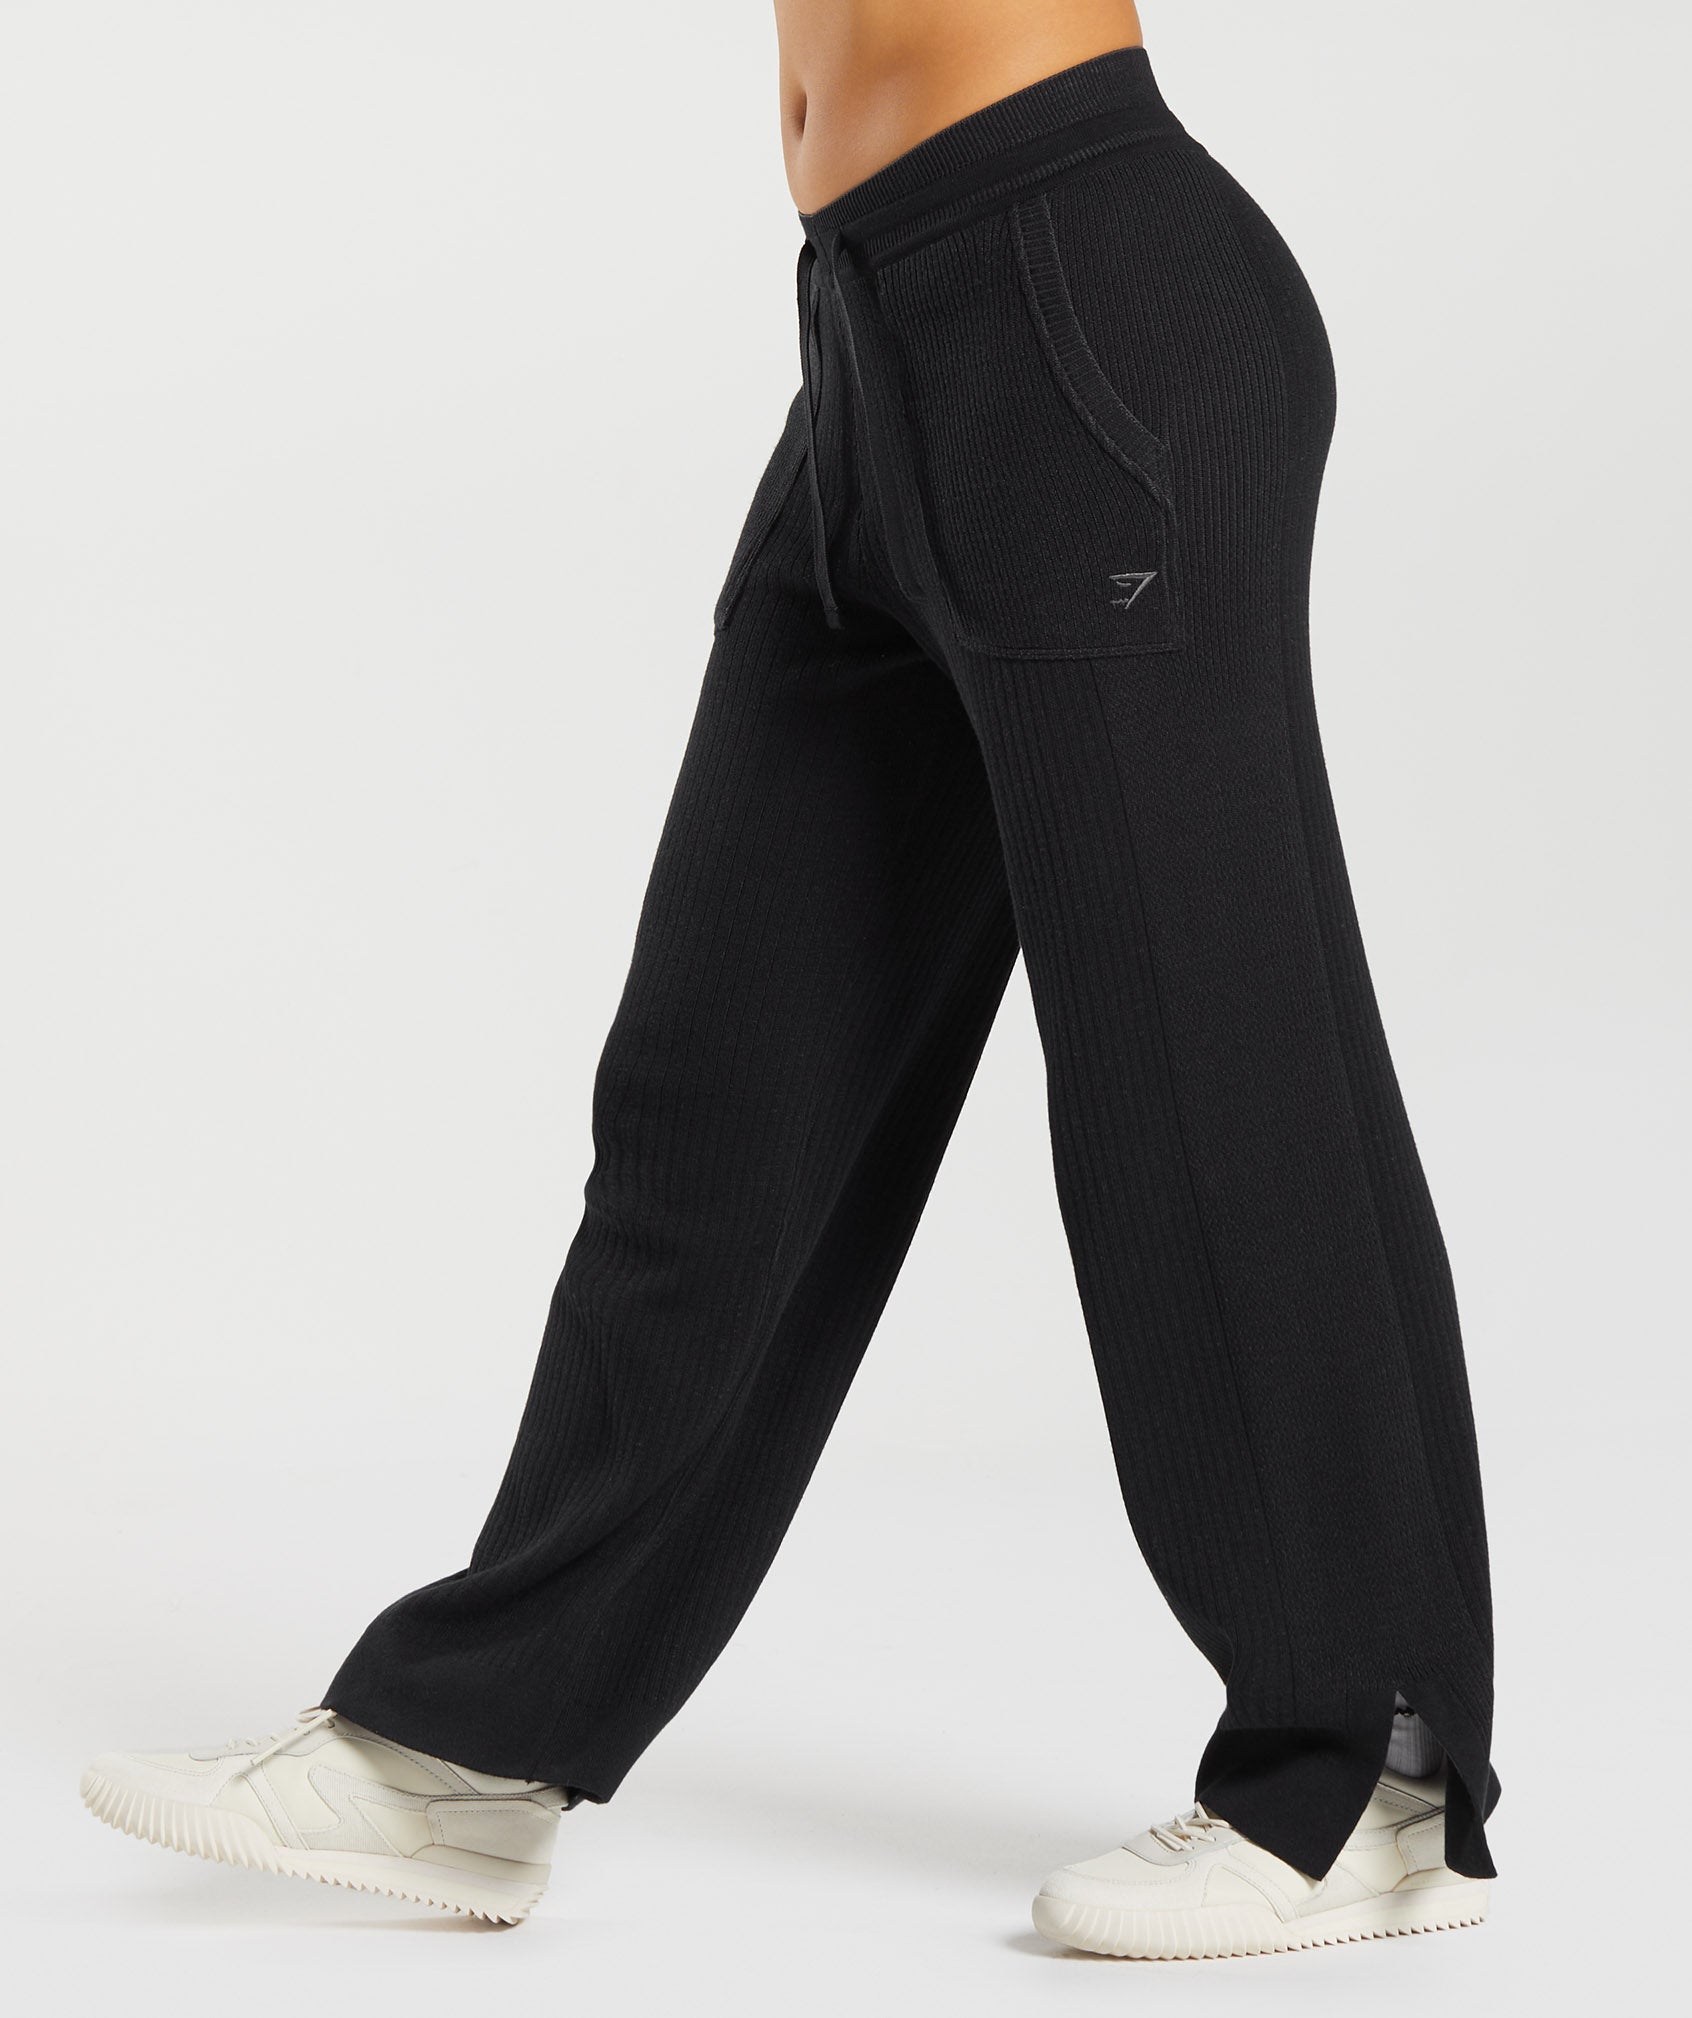 Pause Knitwear Pants in Black/Onyx Grey